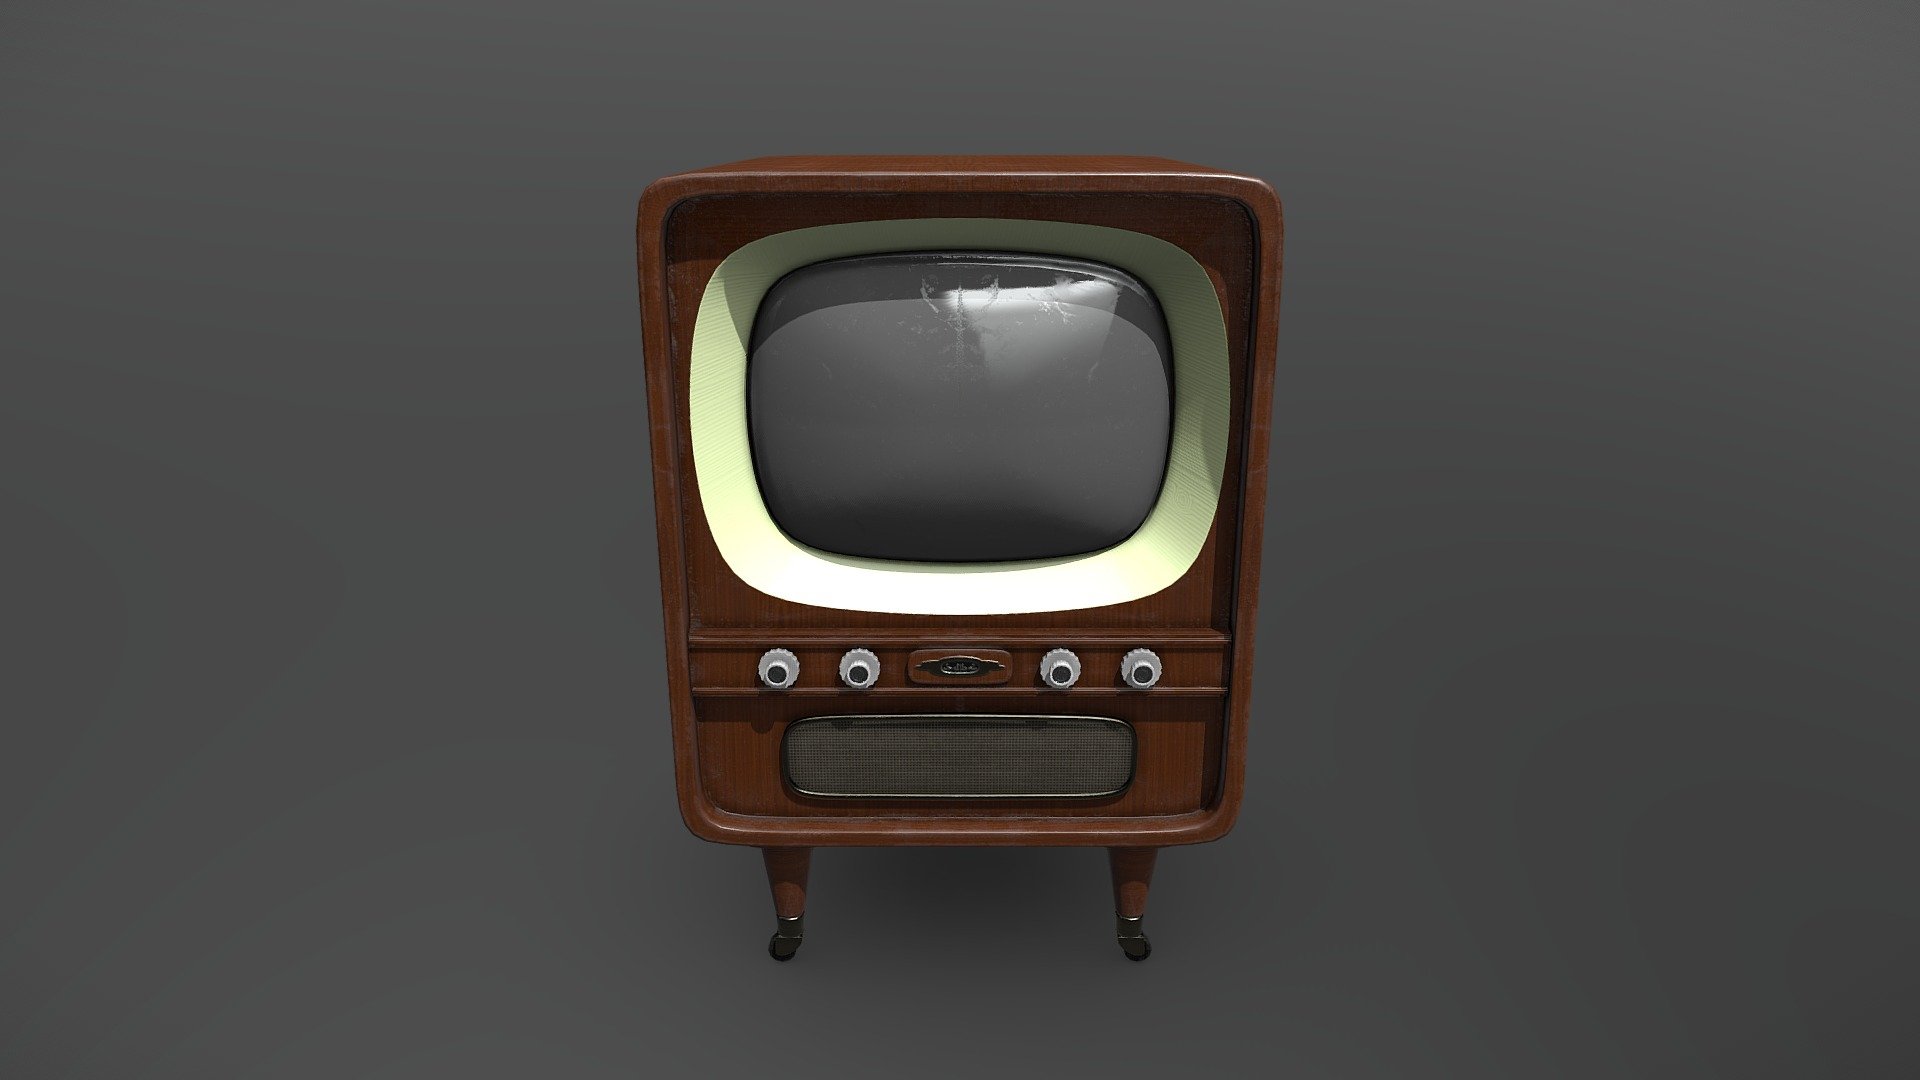 An old antique TV i created a while ago

Instagram:
https://www.instagram.com/smidt3dart/ - Antique TV - Download Free 3D model by AndreasSmidt 3d model